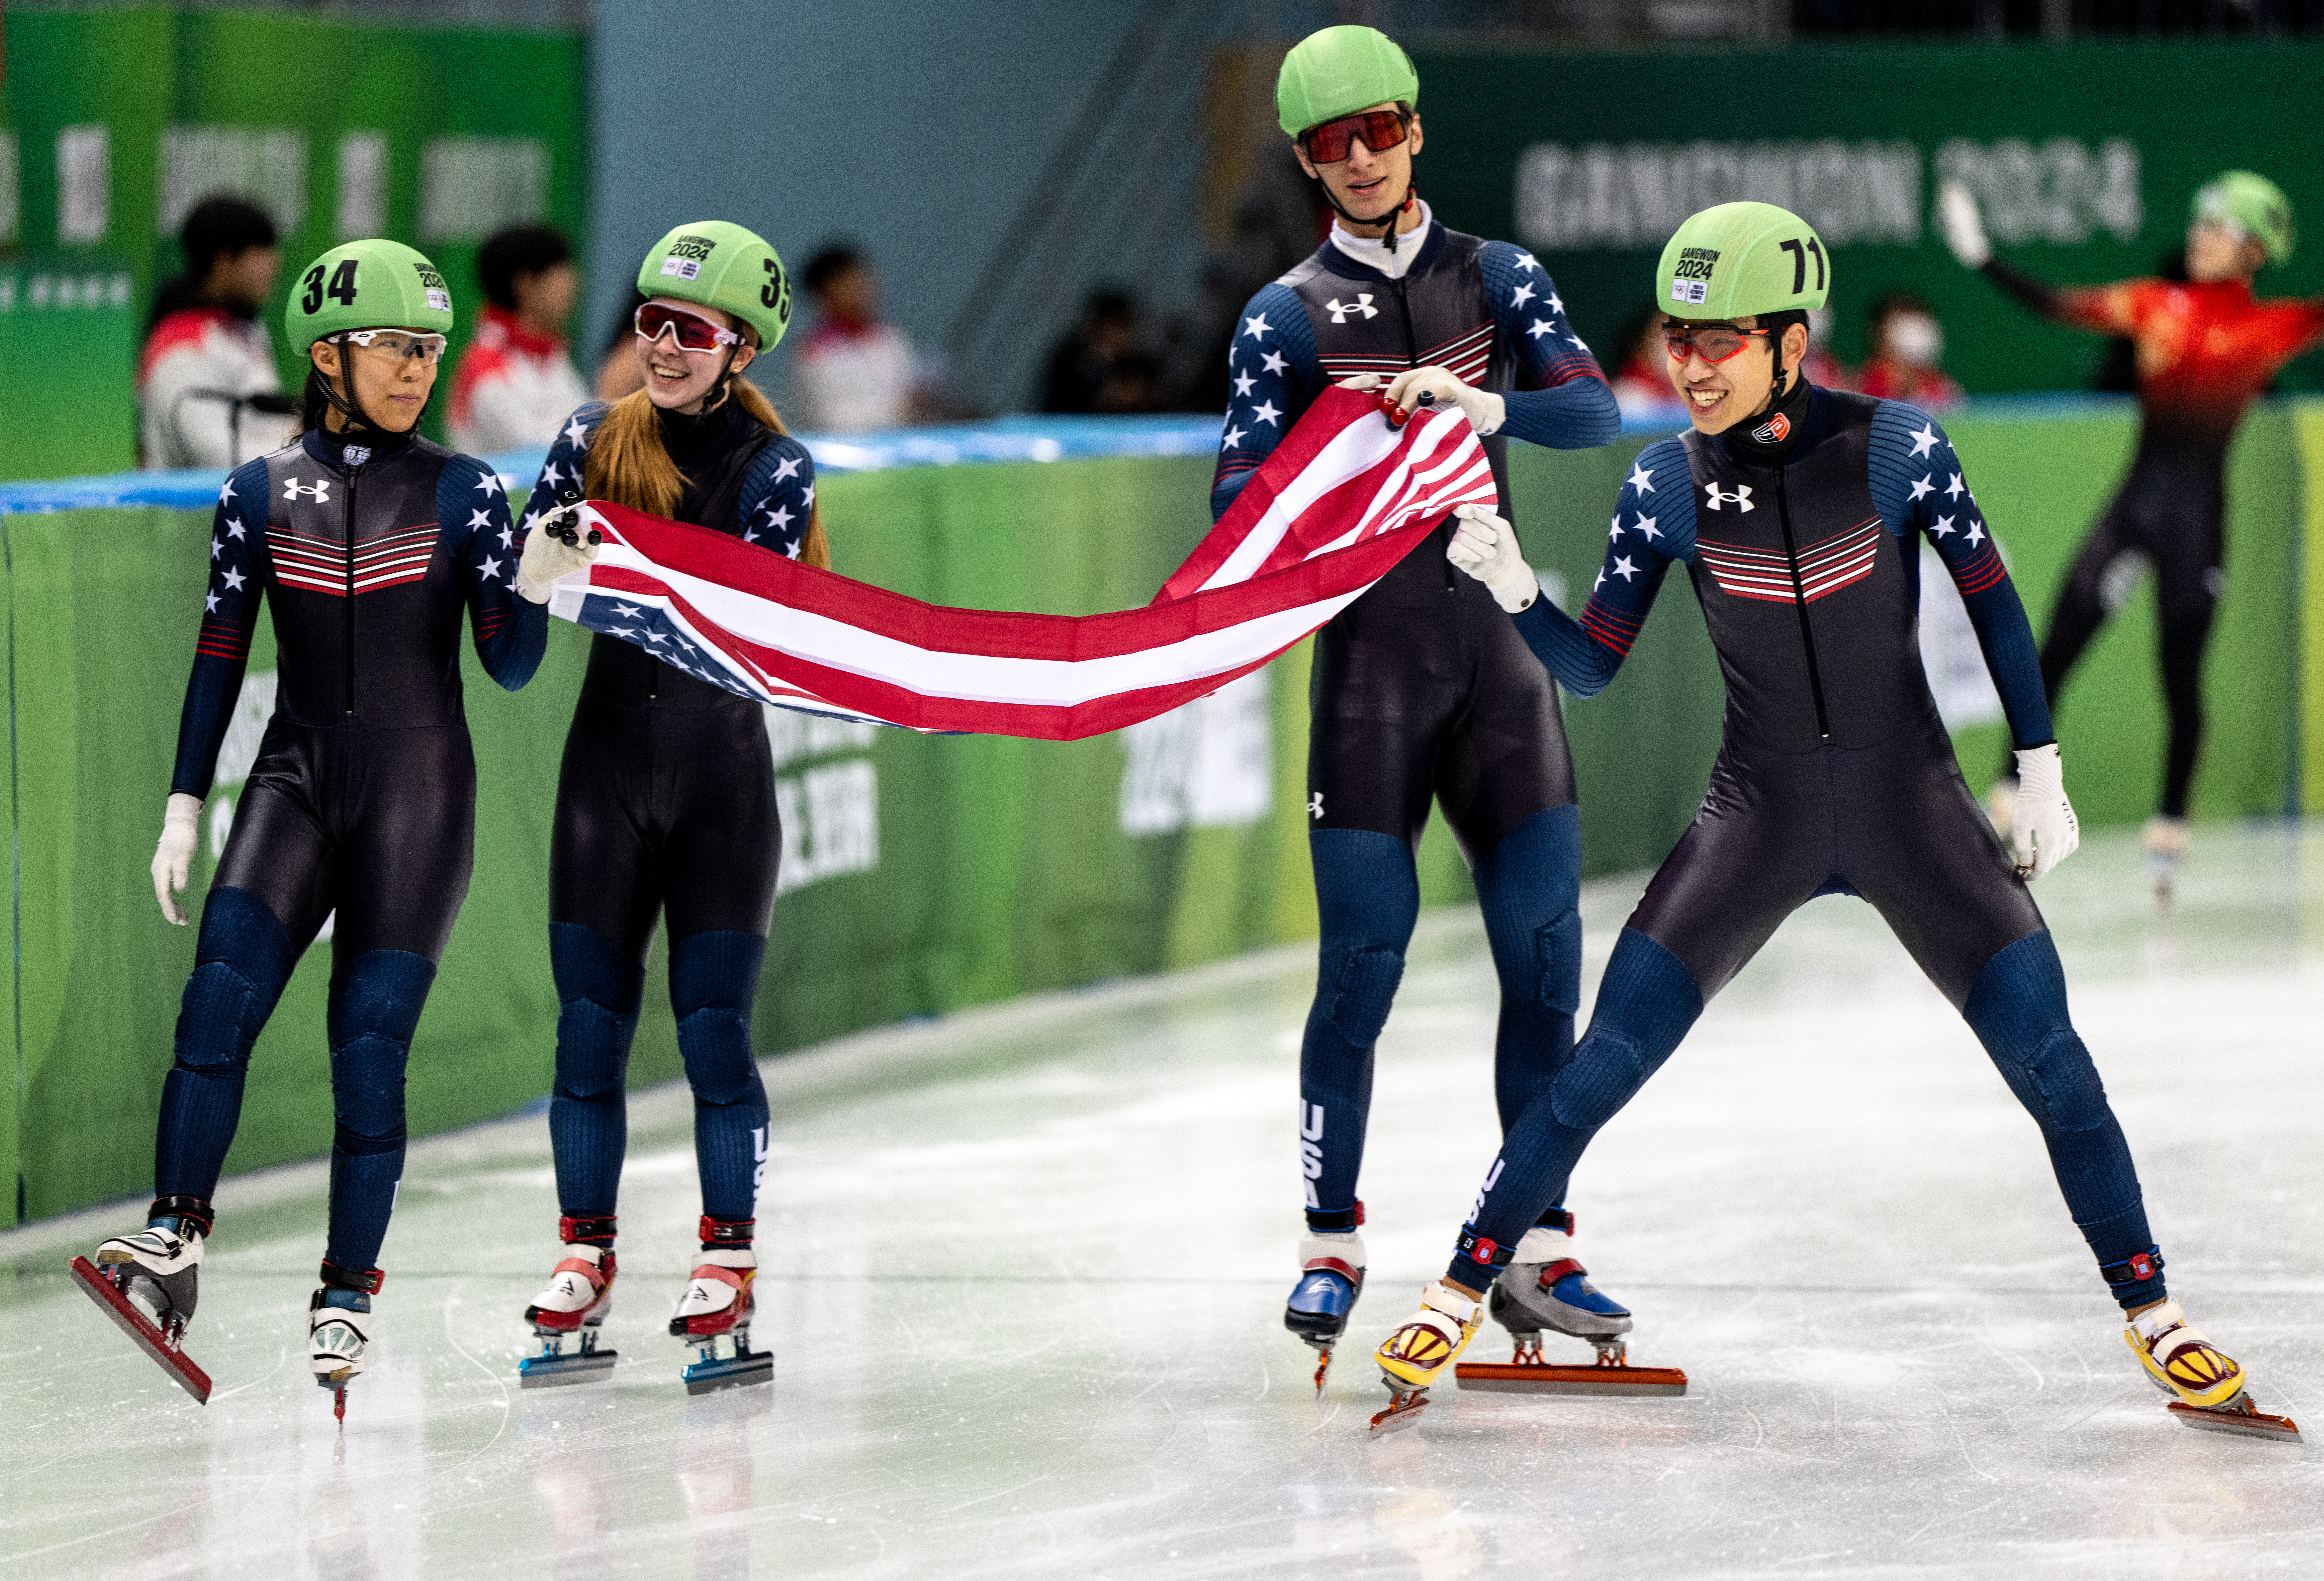 Kyung Eun Jang (USA), Eliza Rhodehamel (USA), Julius Kazanecki (USA) and Sean Boxiong Shuai (USA) celebrate with the national flag of the United States